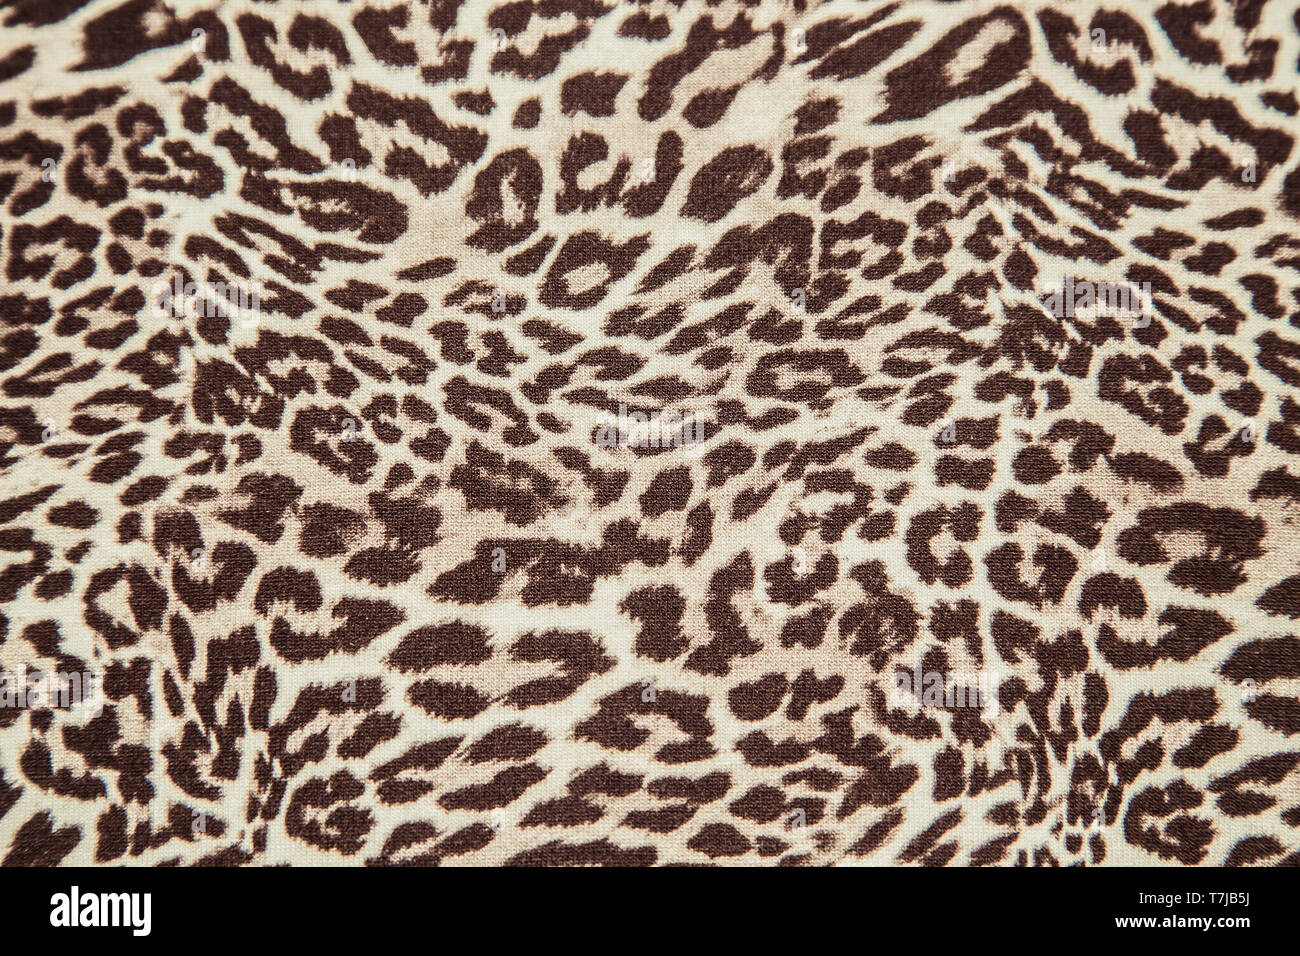 Leopard animal print texture material Stock Photo